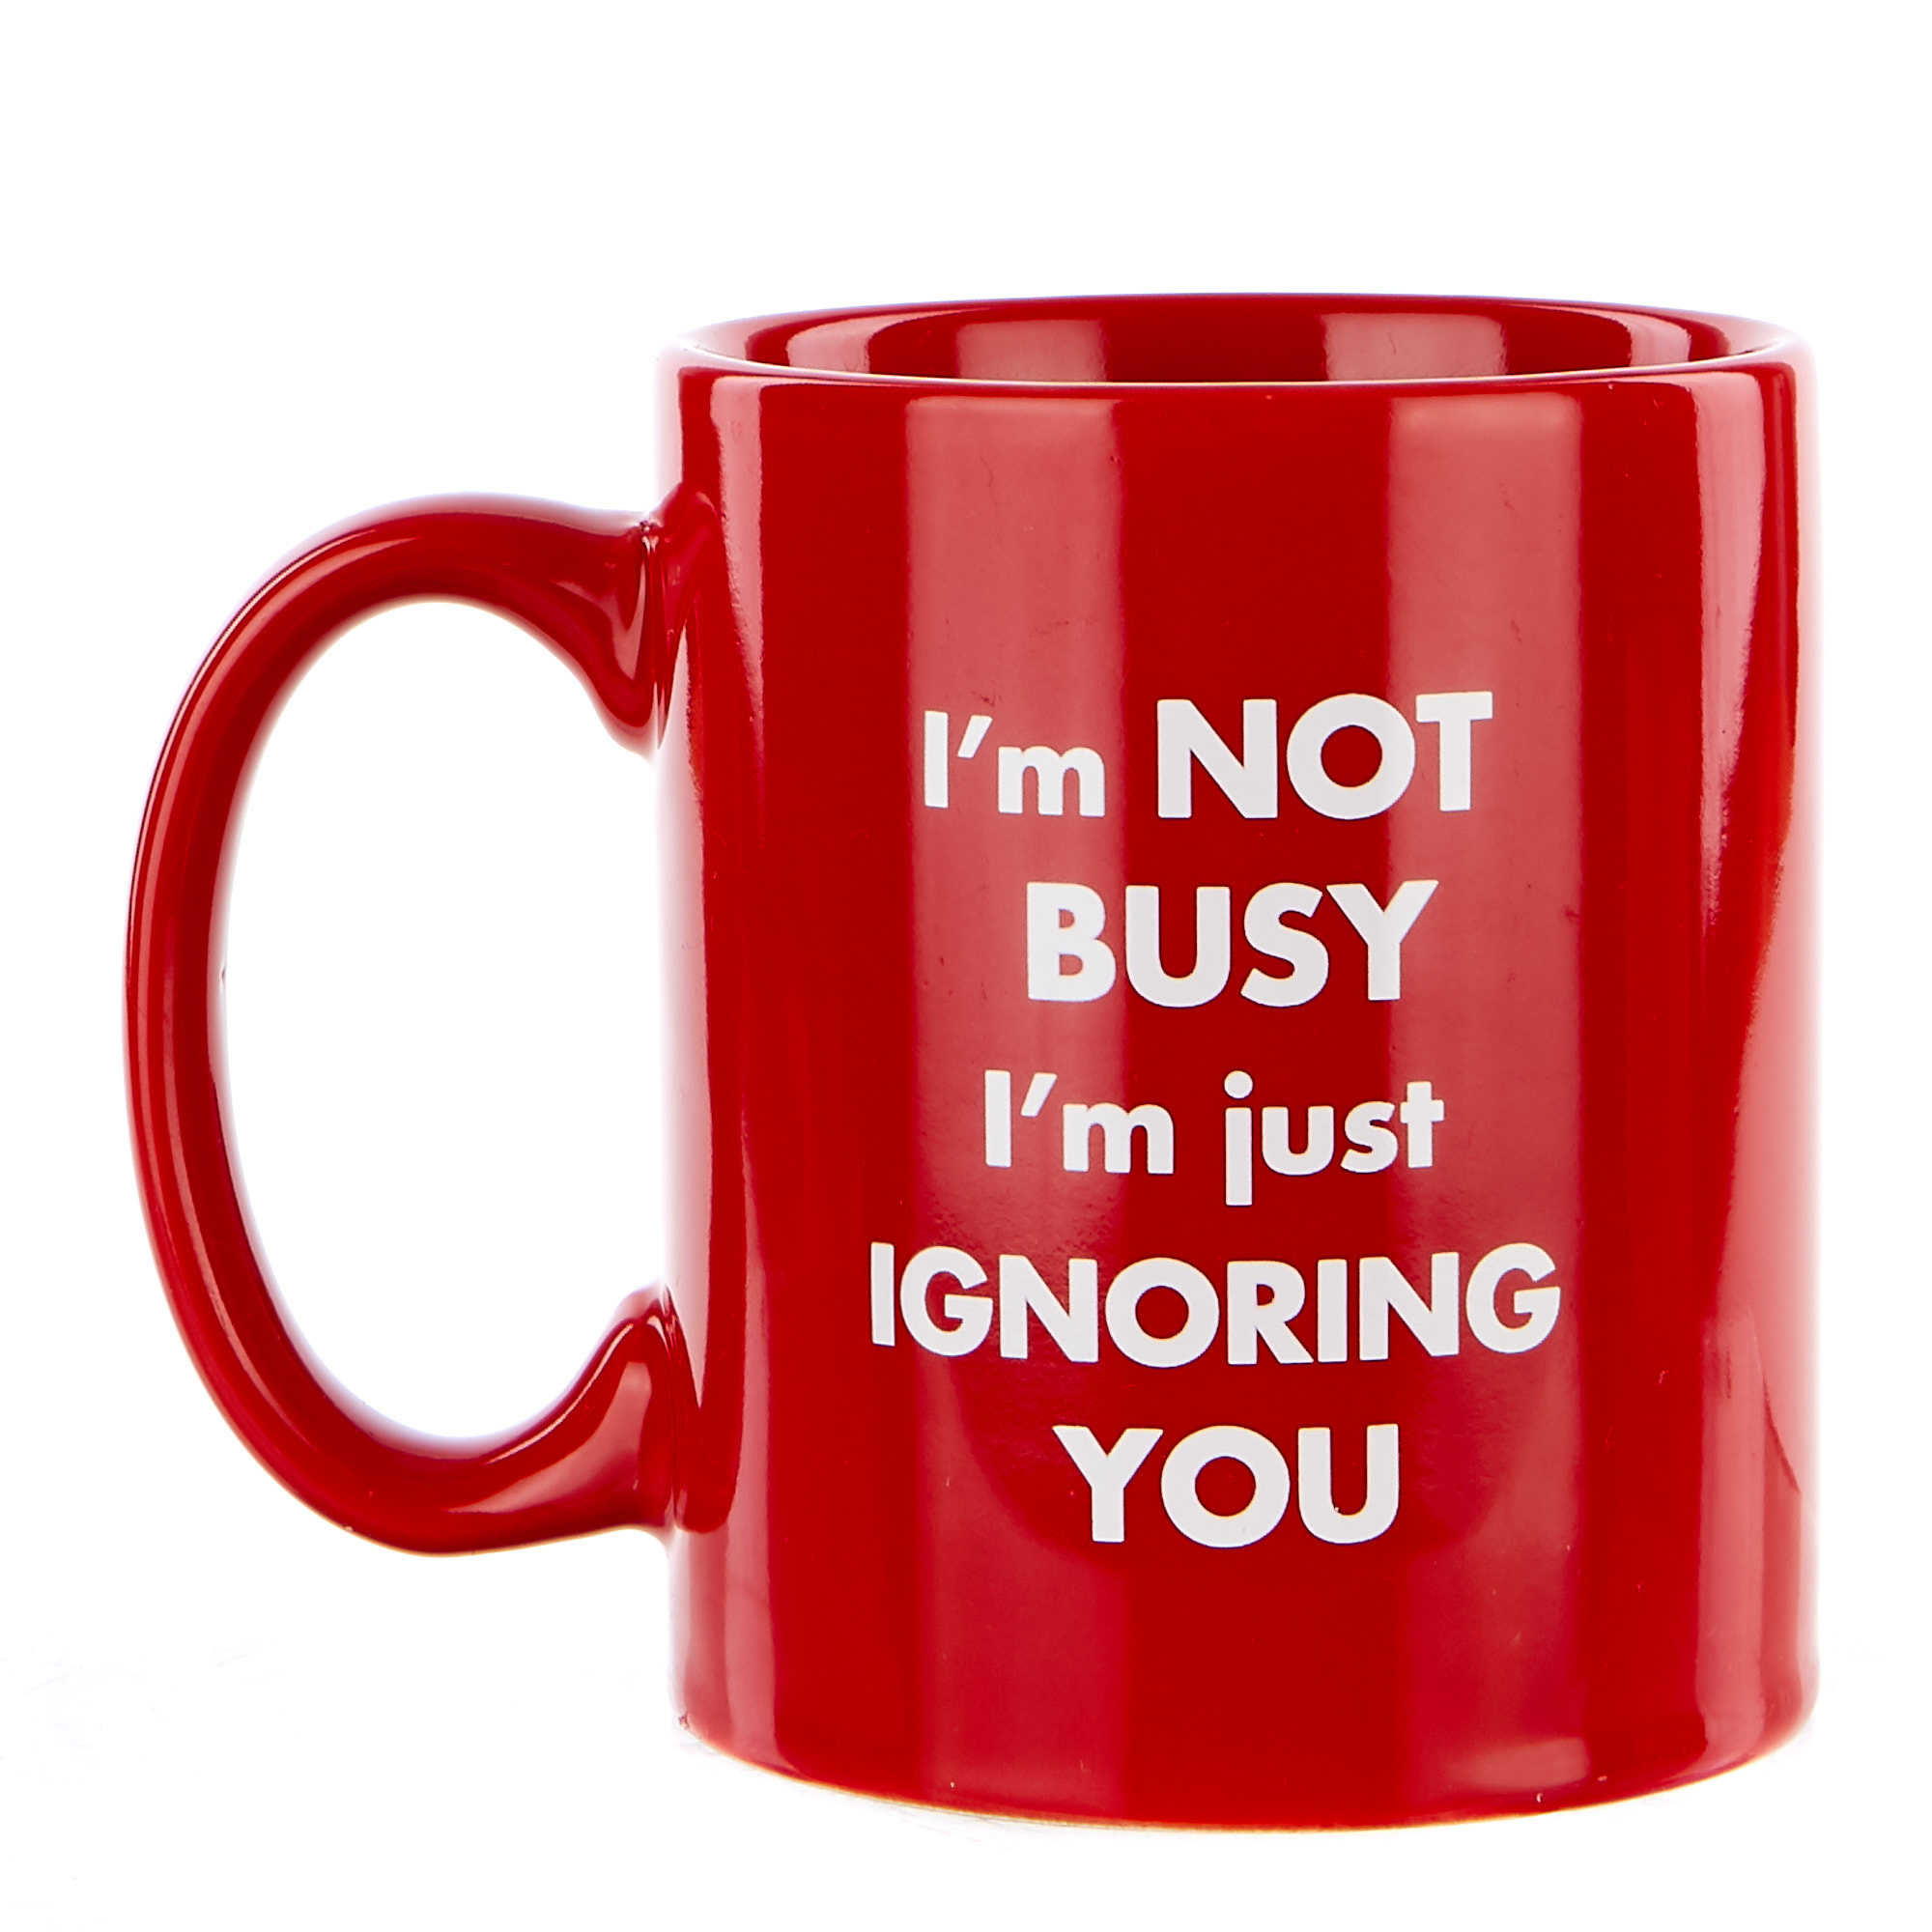 Not Busy I'm Just Ignoring You Mug